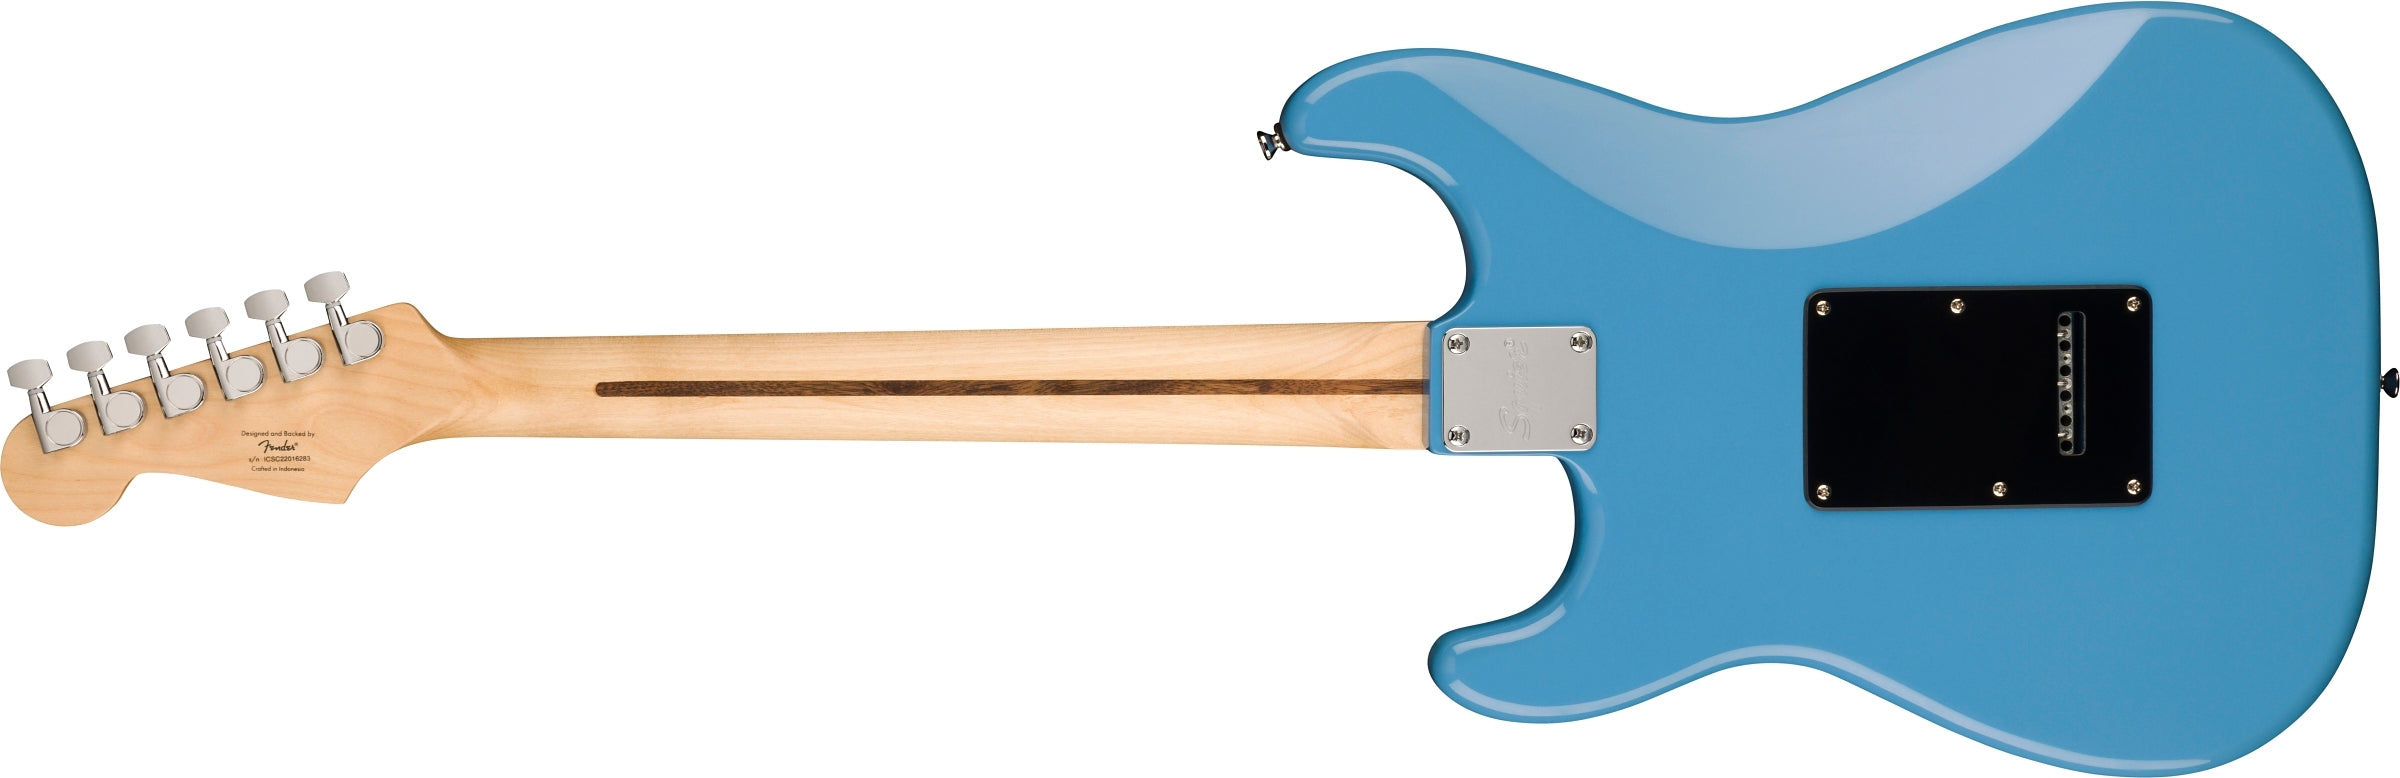 Fender Squier Sonic Stratocaster, California Blue